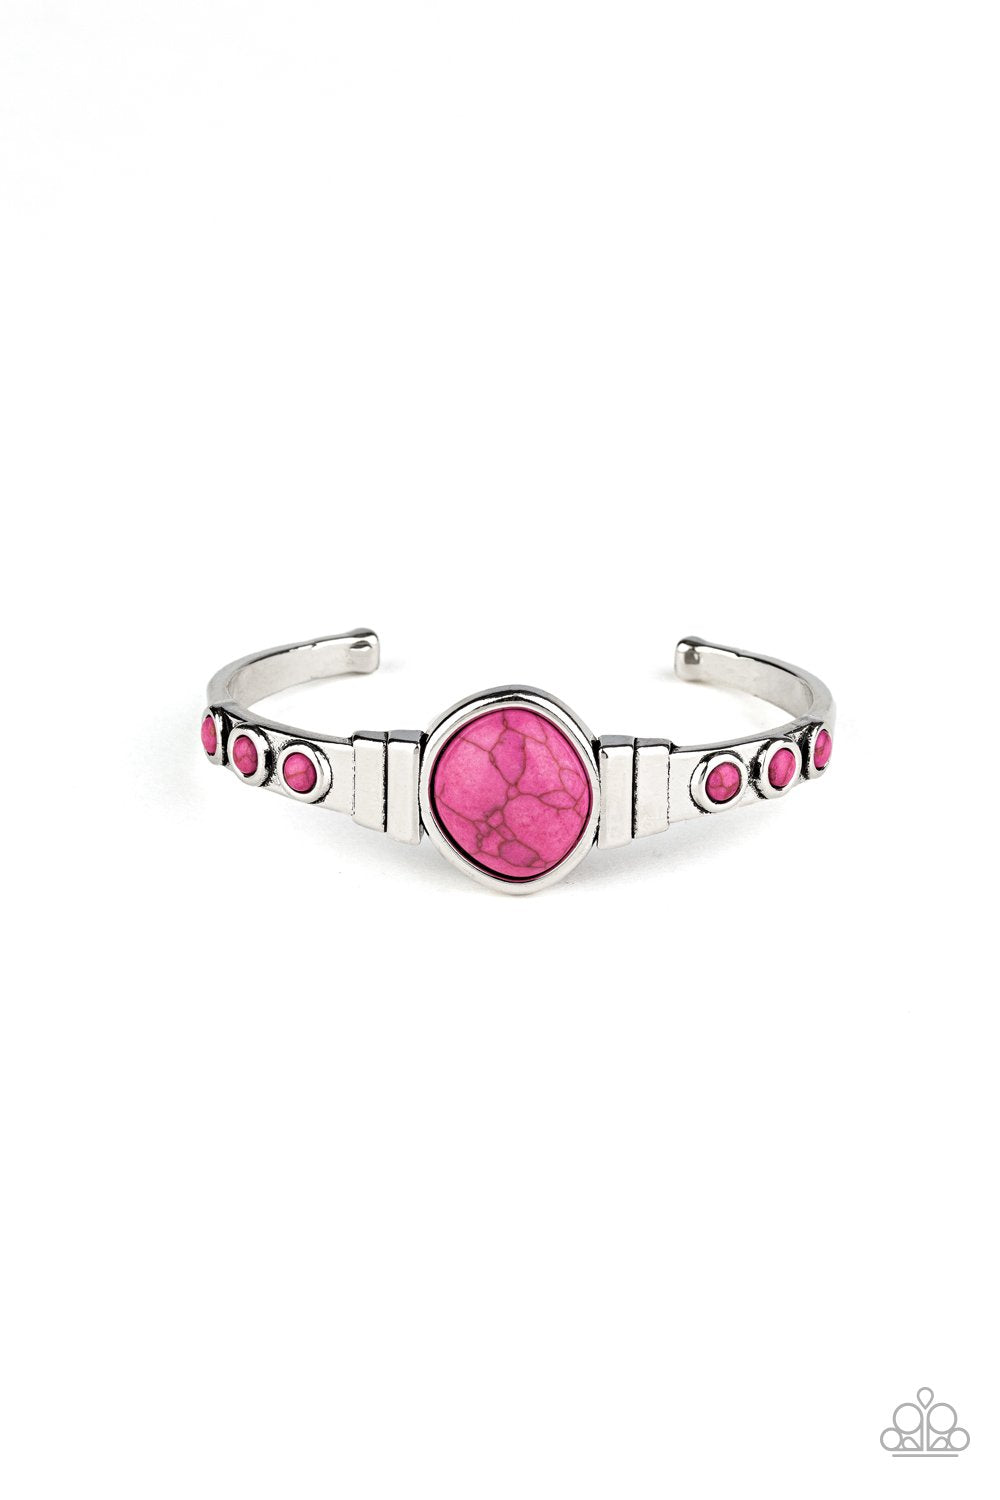 Spirit Guide - Pink Bracelet freeshipping - JewLz4u Gemstone Gallery